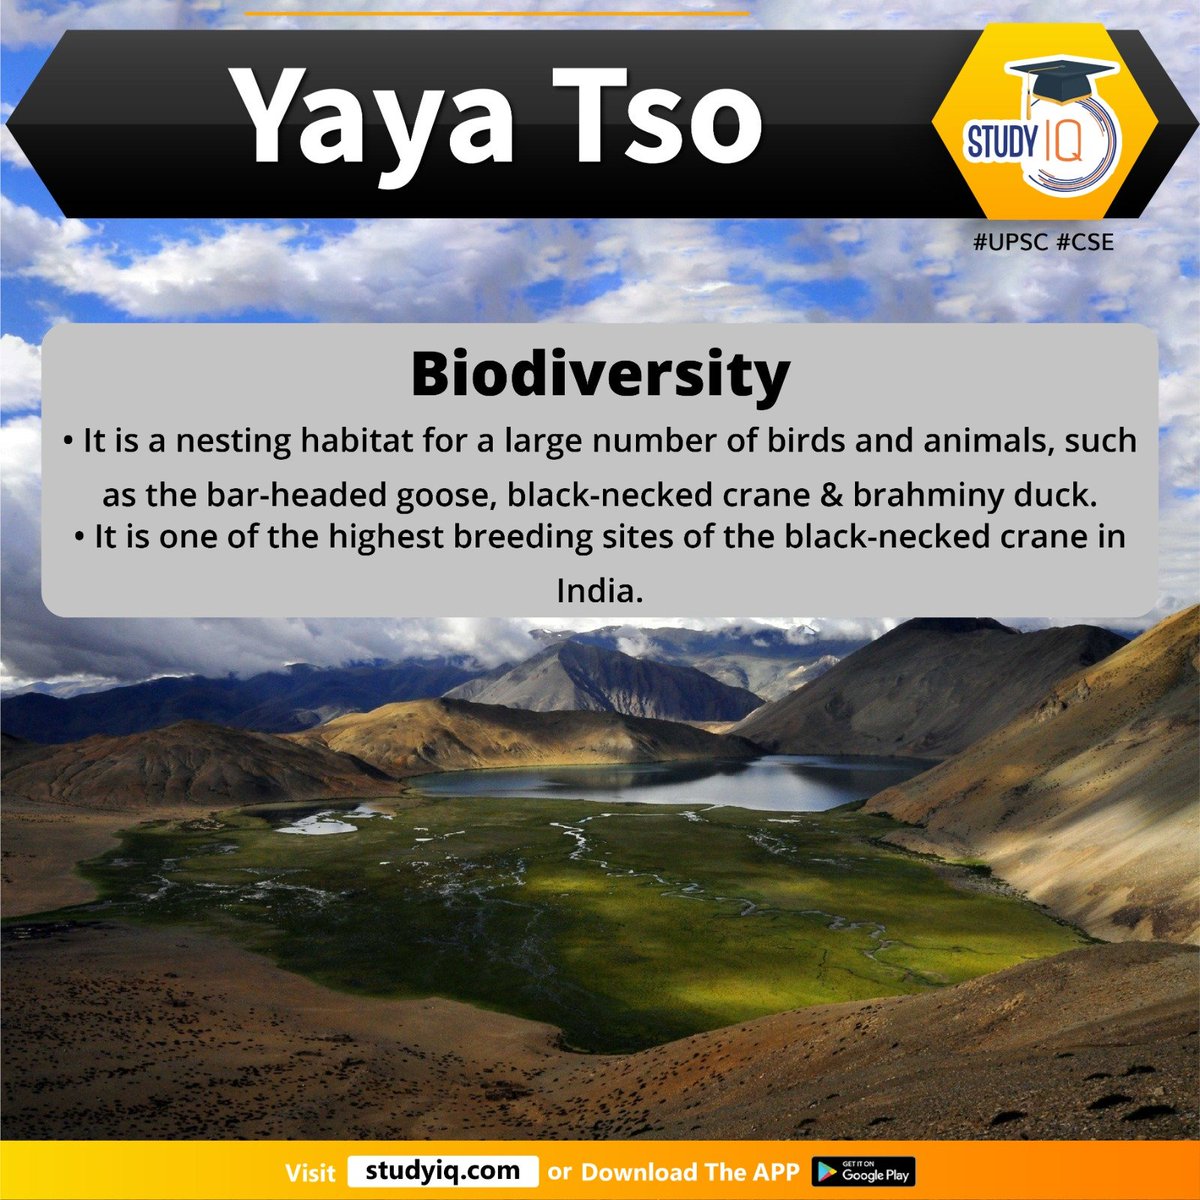 Yaya Tso

#yayatso #whyinnews #ladakh #biodiversityhieritagesite #birds #beautifullake #bhs #biologicaldiversityact #watershed #yayatsosite #biodiversity #nestinghabitat #animals #blackneckedcrane #brahminyduck #india #upsc #cse #ips #ias